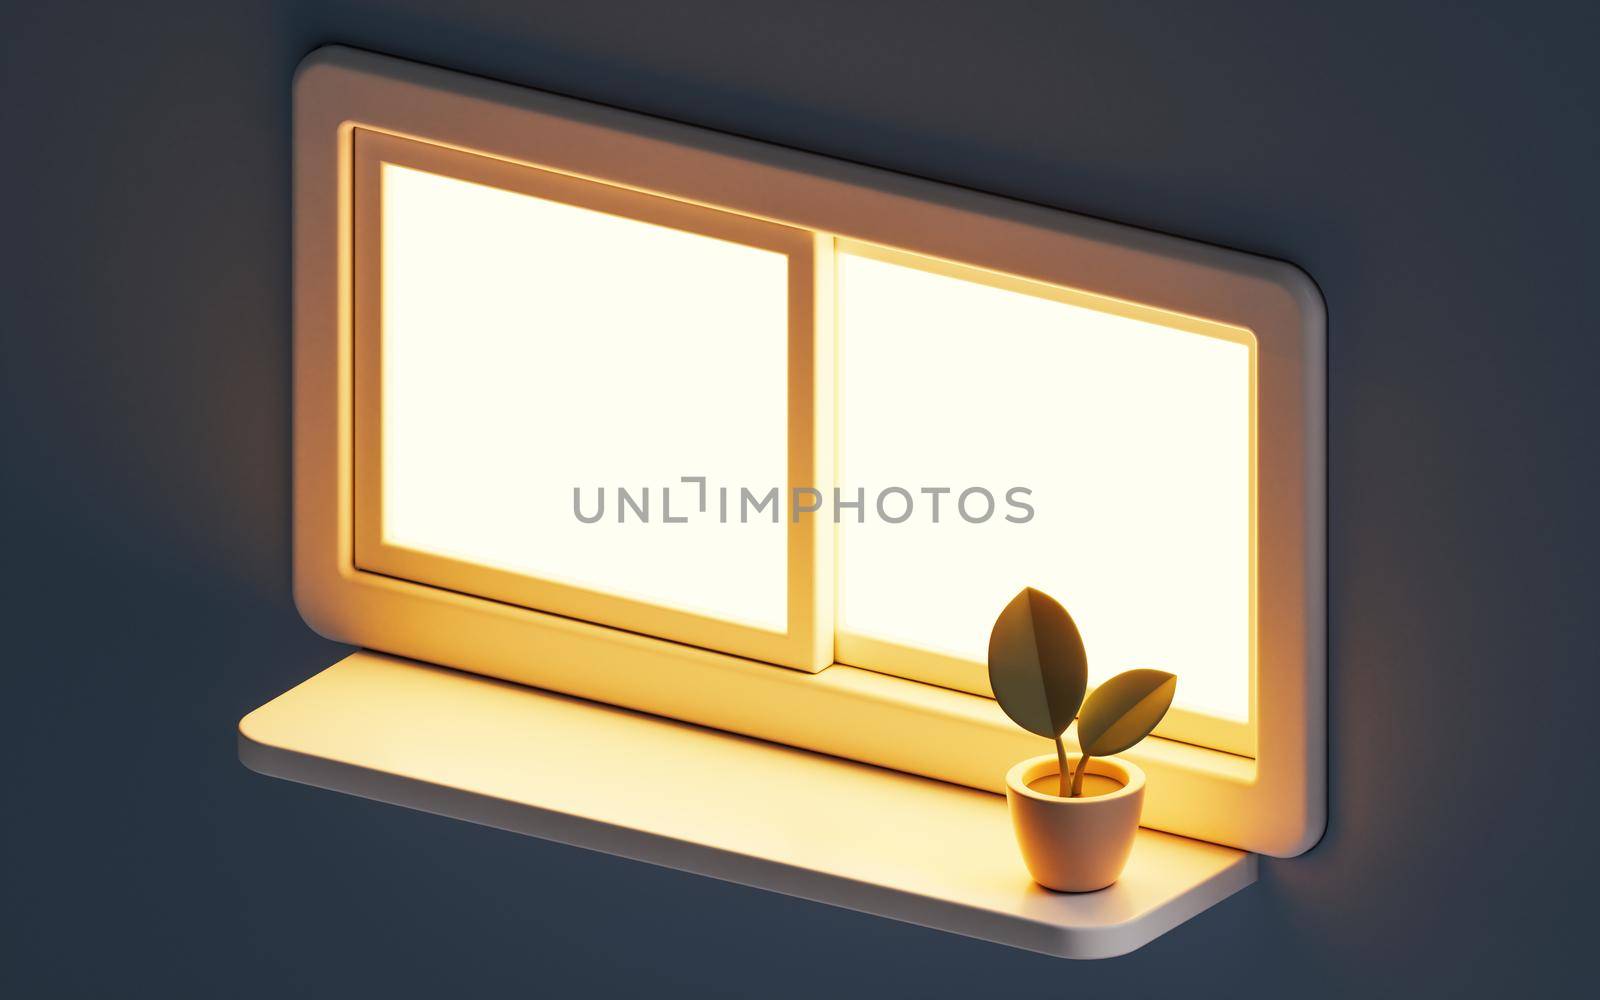 3D cartoon style windowsill with golden light, 3d rendering. by vinkfan